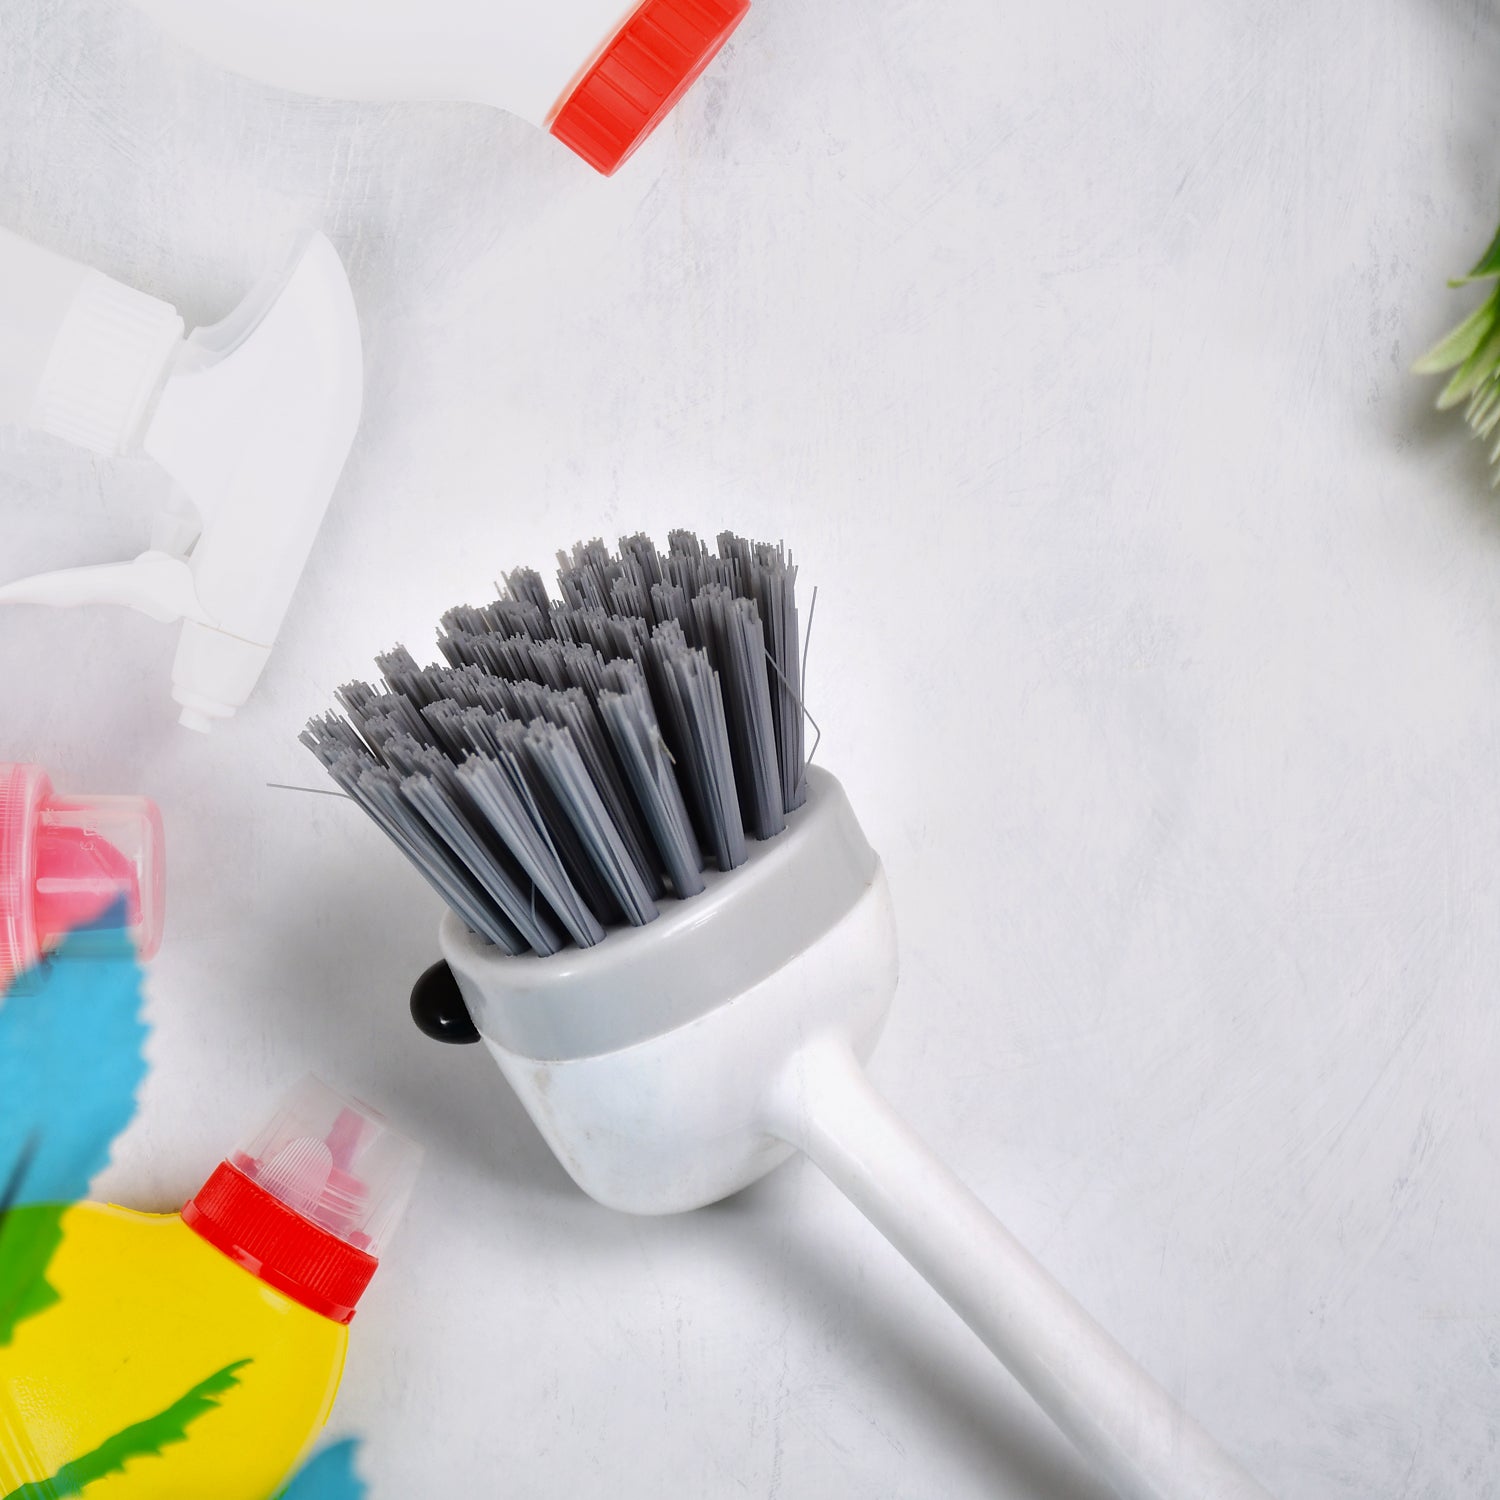 6675 Cleaning Plastic Brush for Multipurpose Dirt Cleaning DeoDap